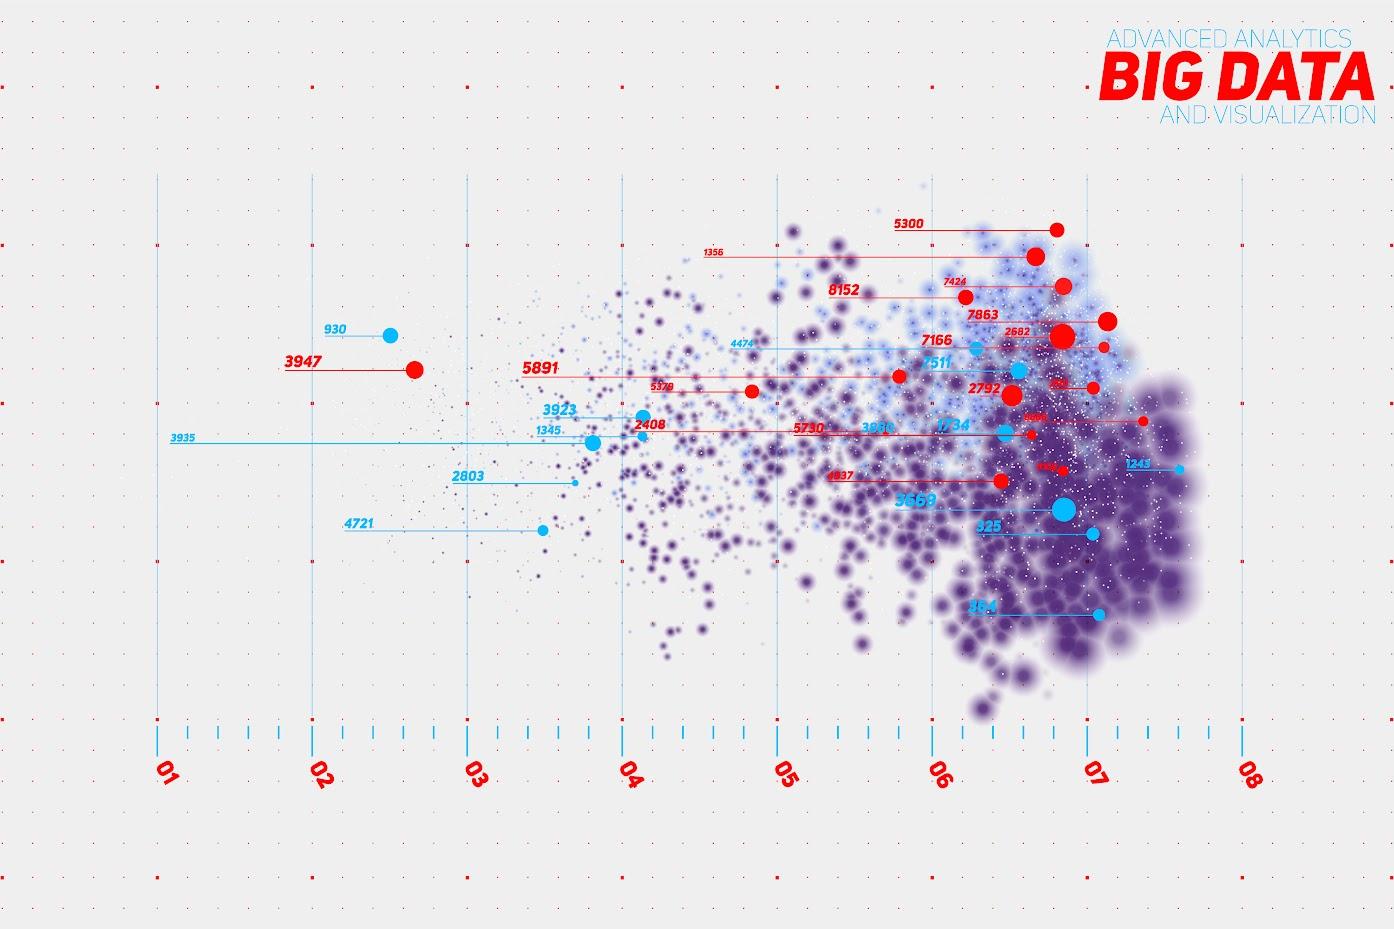 grafico de punto sobre big data